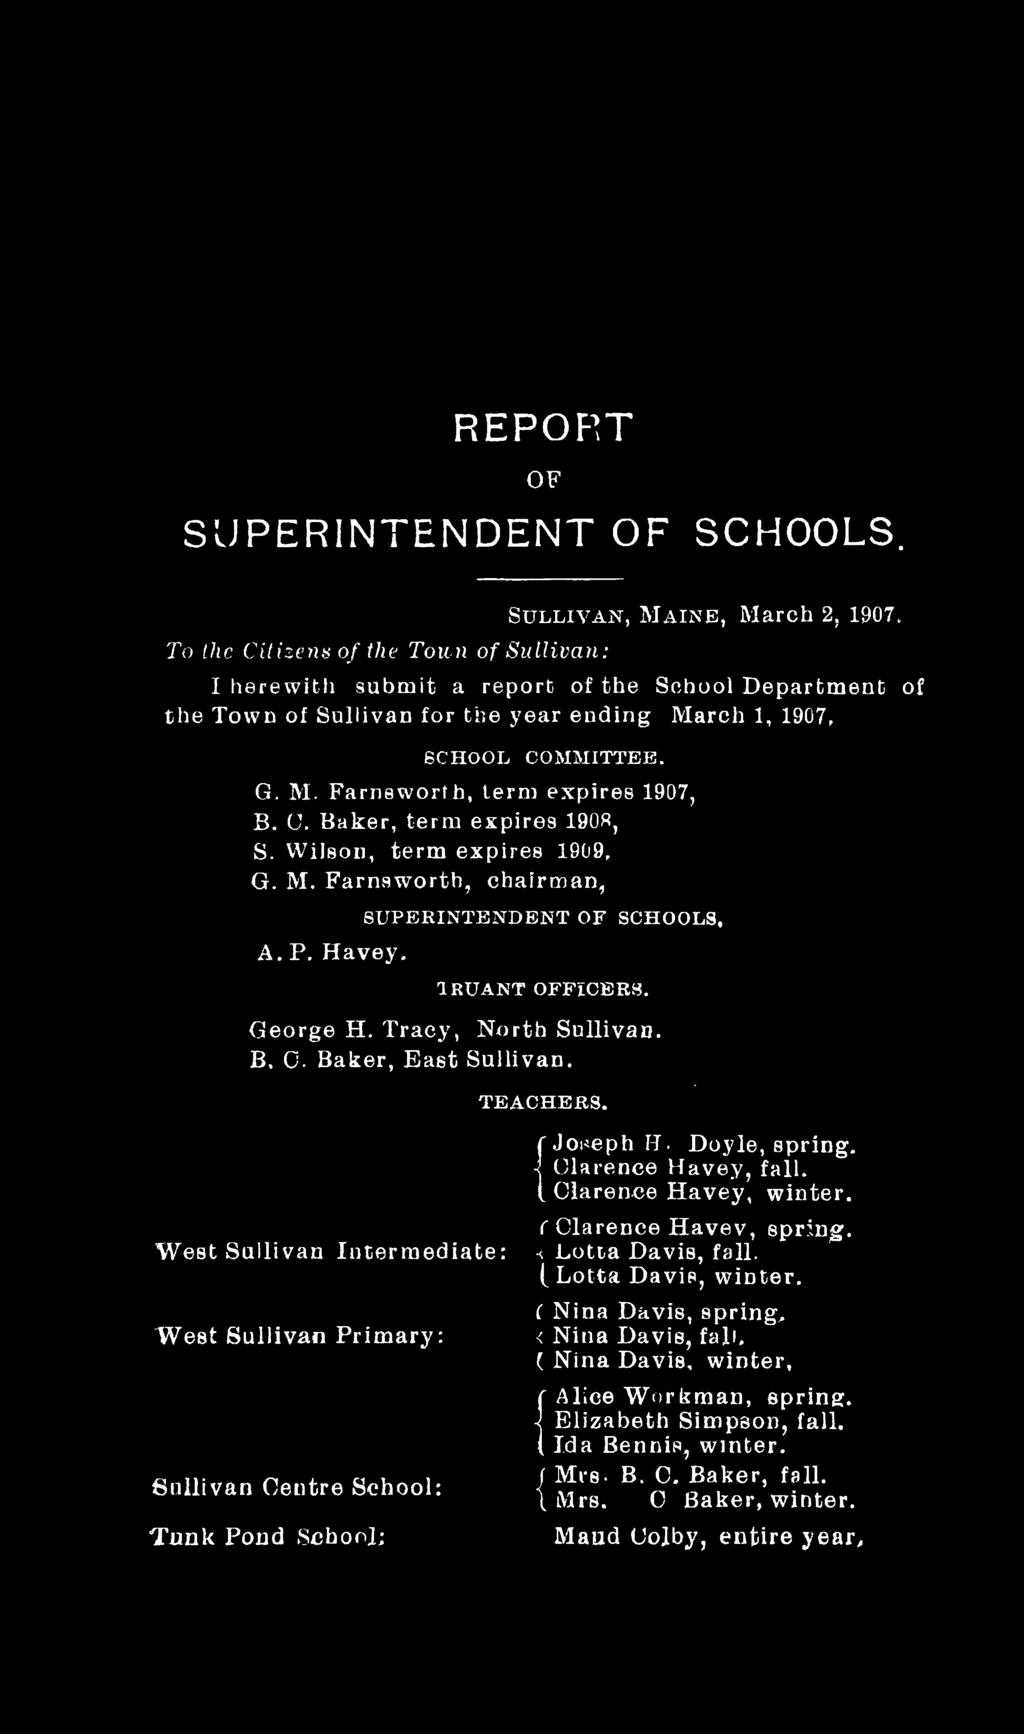 Wilson, term expires 1909, G. M. Farnsworth, chairman, A. P. Havey, SUPERINTENDENT OF SCHOOLS, t r u a n t o f f ic e r s. George H. Tracy, North Sullivan. B. 0. Baker, East Sullivan. TEACHERS.